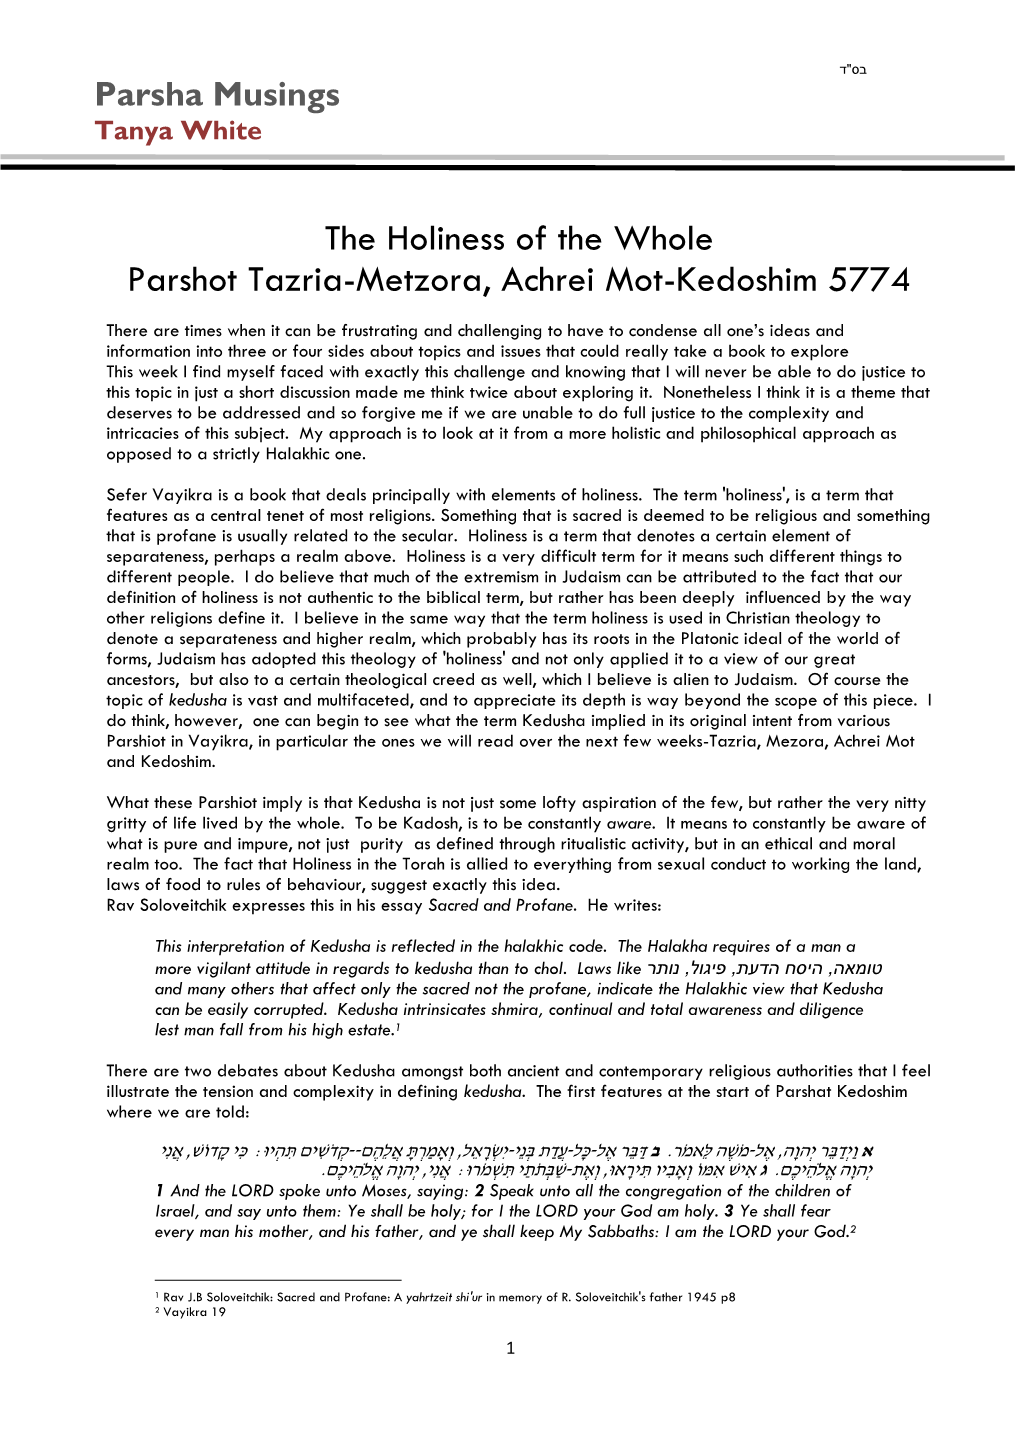 The Holiness of the Whole Parshot Tazria-Metzora, Achrei Mot-Kedoshim 5774